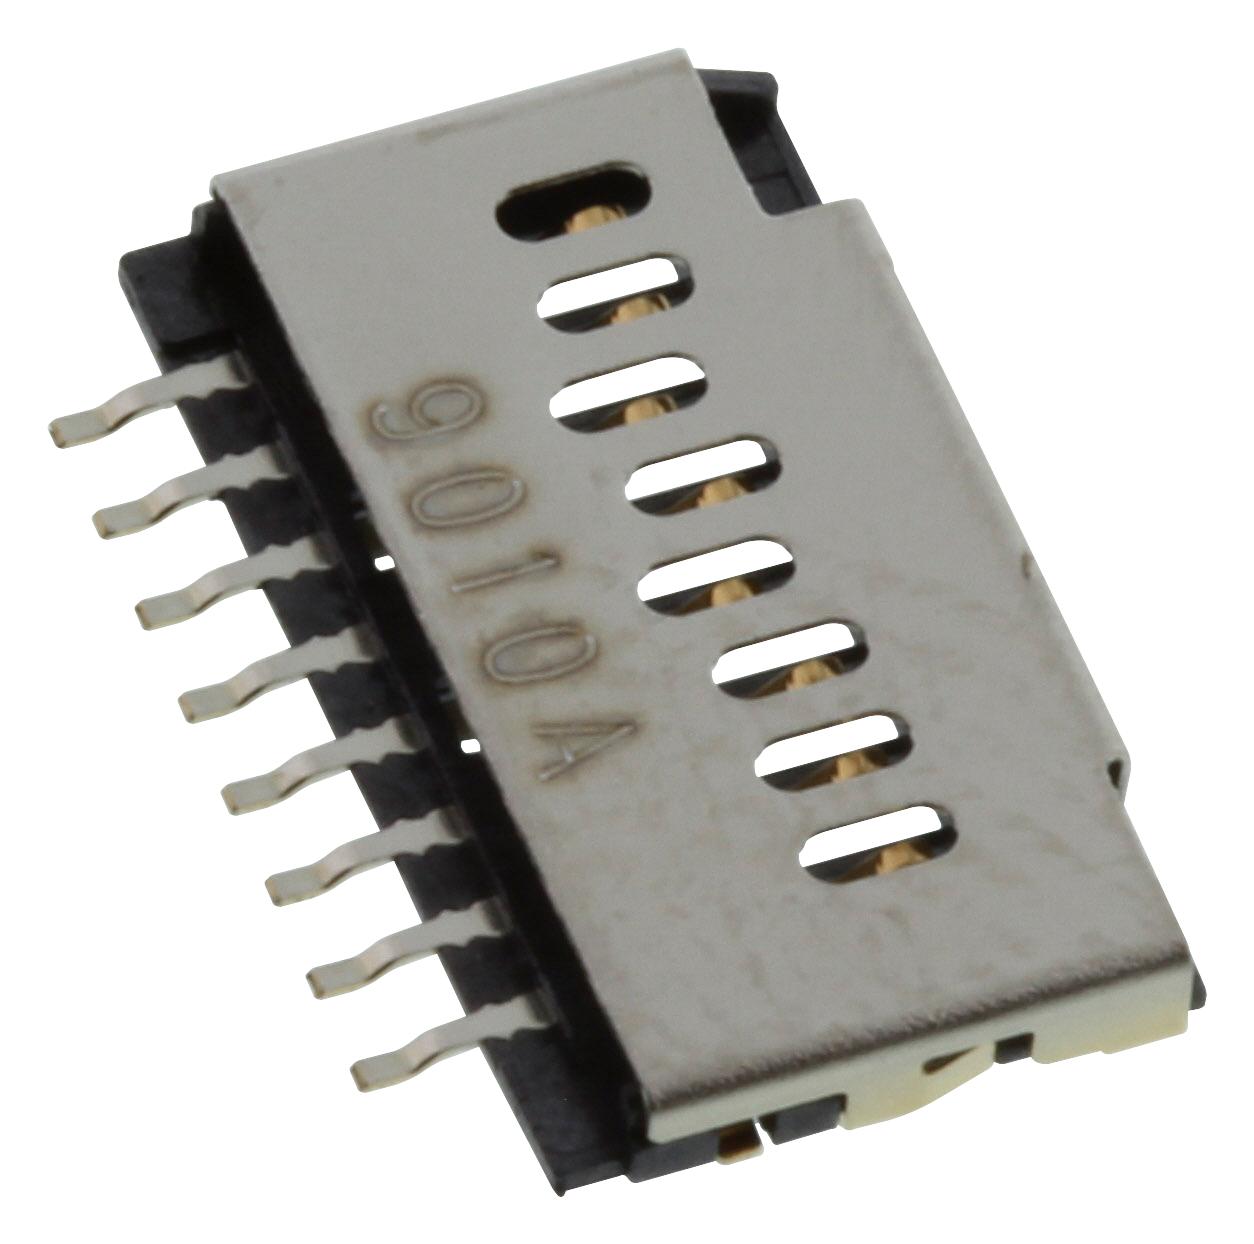 105162-0001 CONNECTOR, MICRO SD, PUSH-PULL, 8POS MOLEX